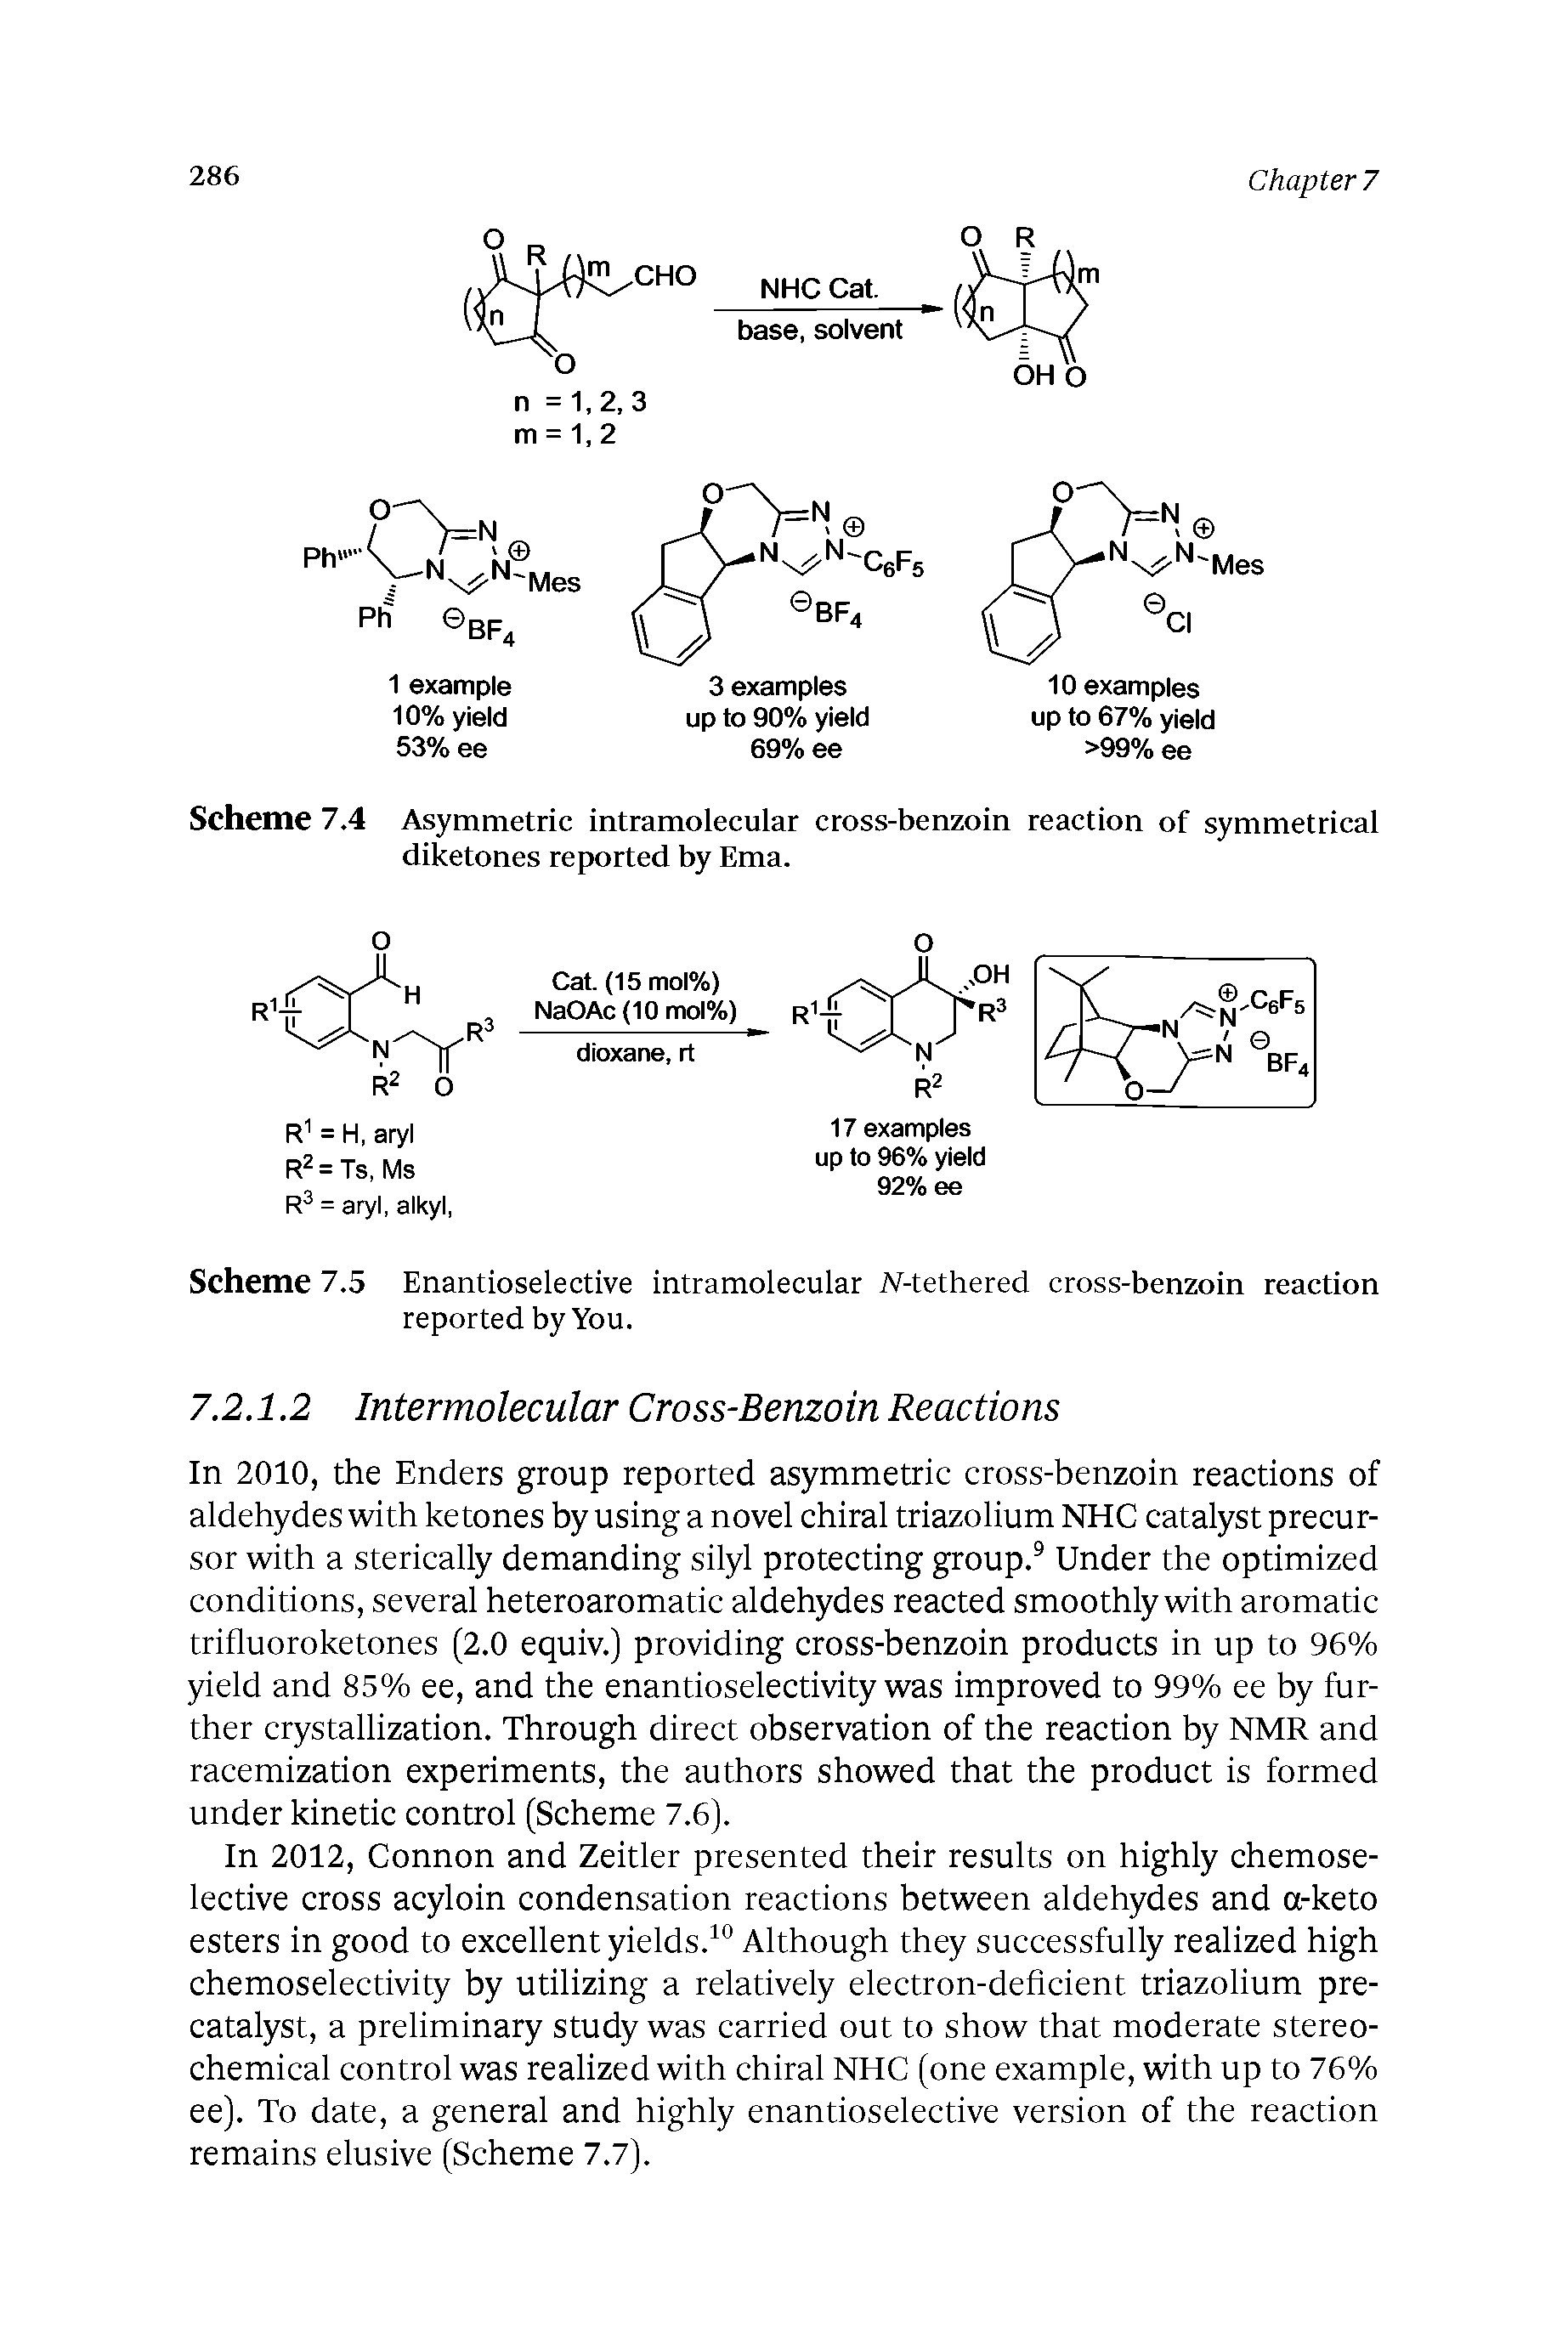 Scheme 7.4 Asymmetric intramolecular cross-benzoin reaction of symmetrical diketones reported by Ema.